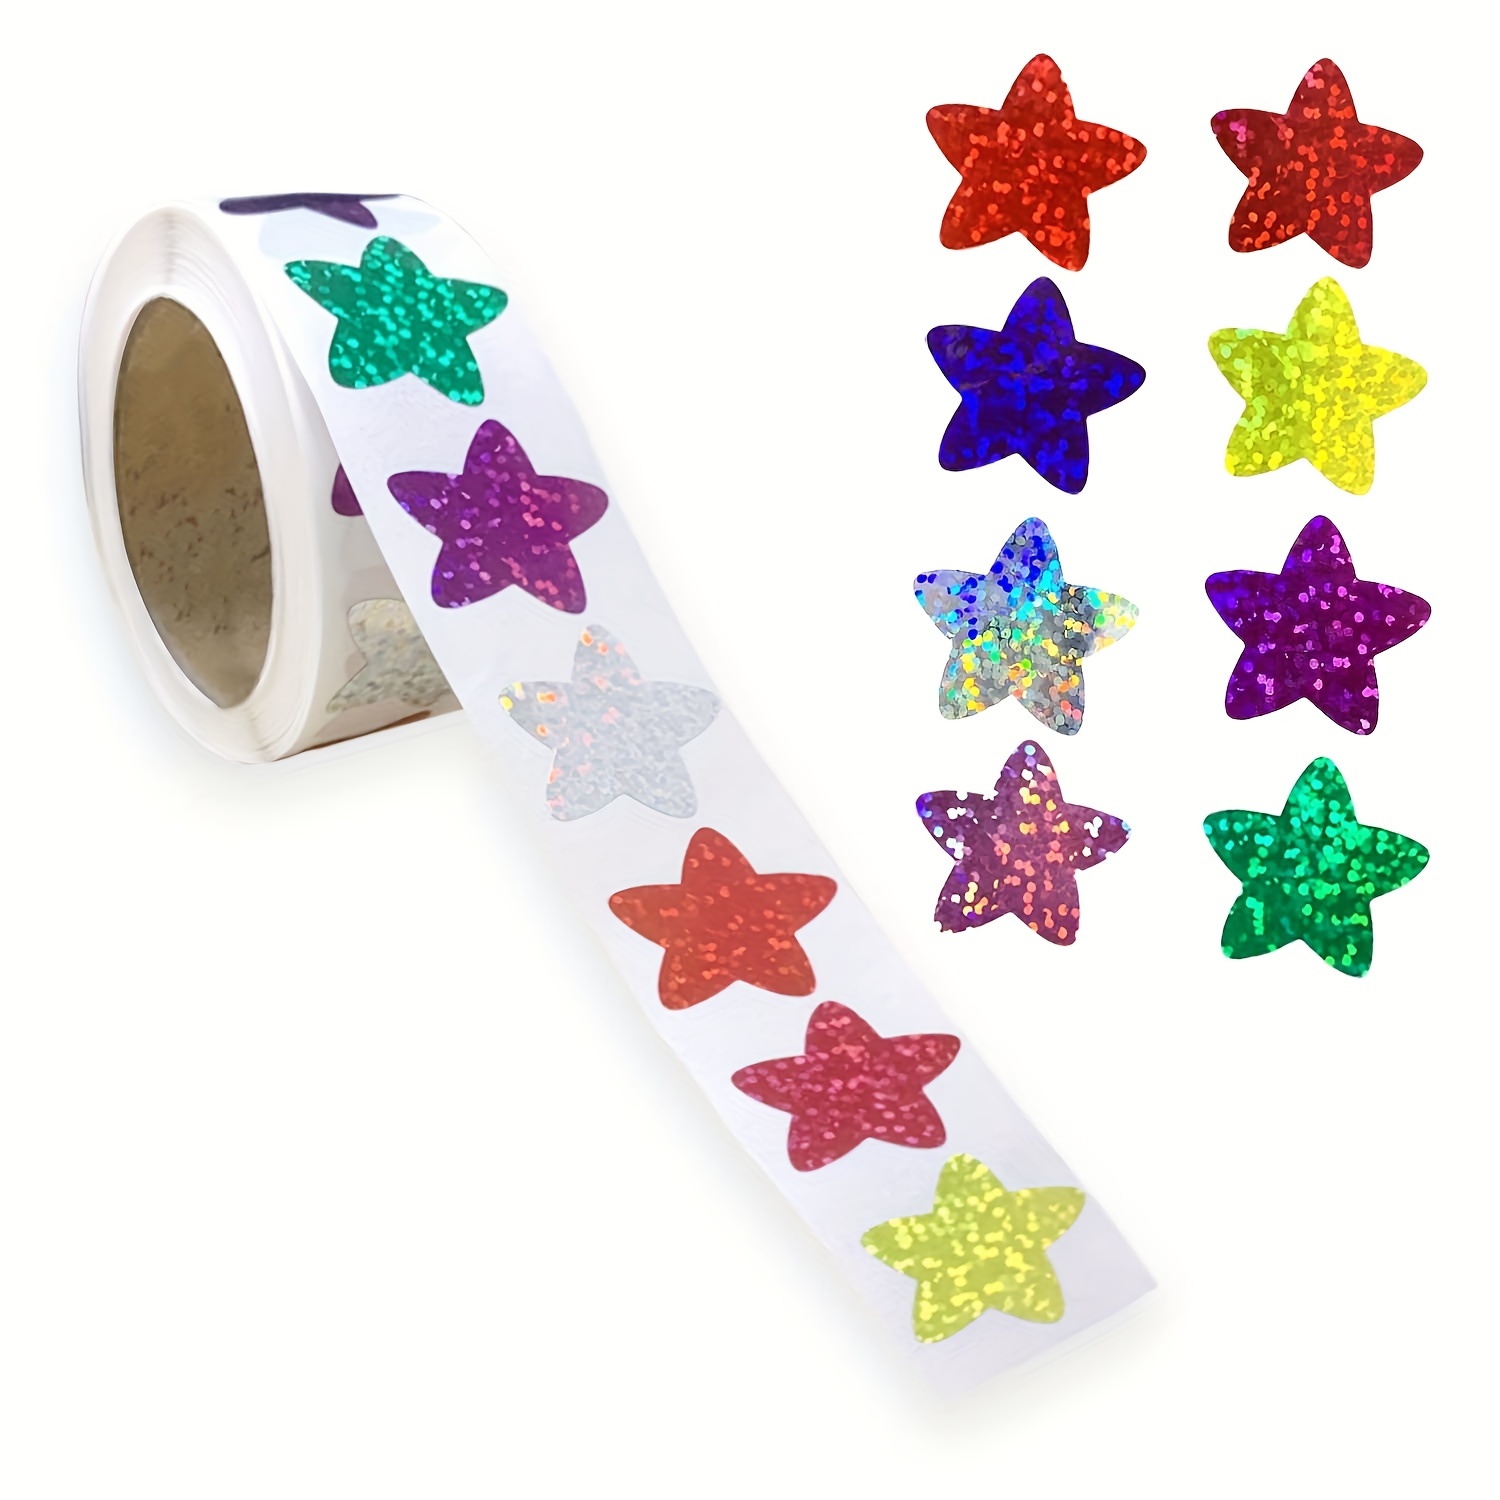 500pcs Colorful Glitter Heart Stickers 1 inch Laser Decorative